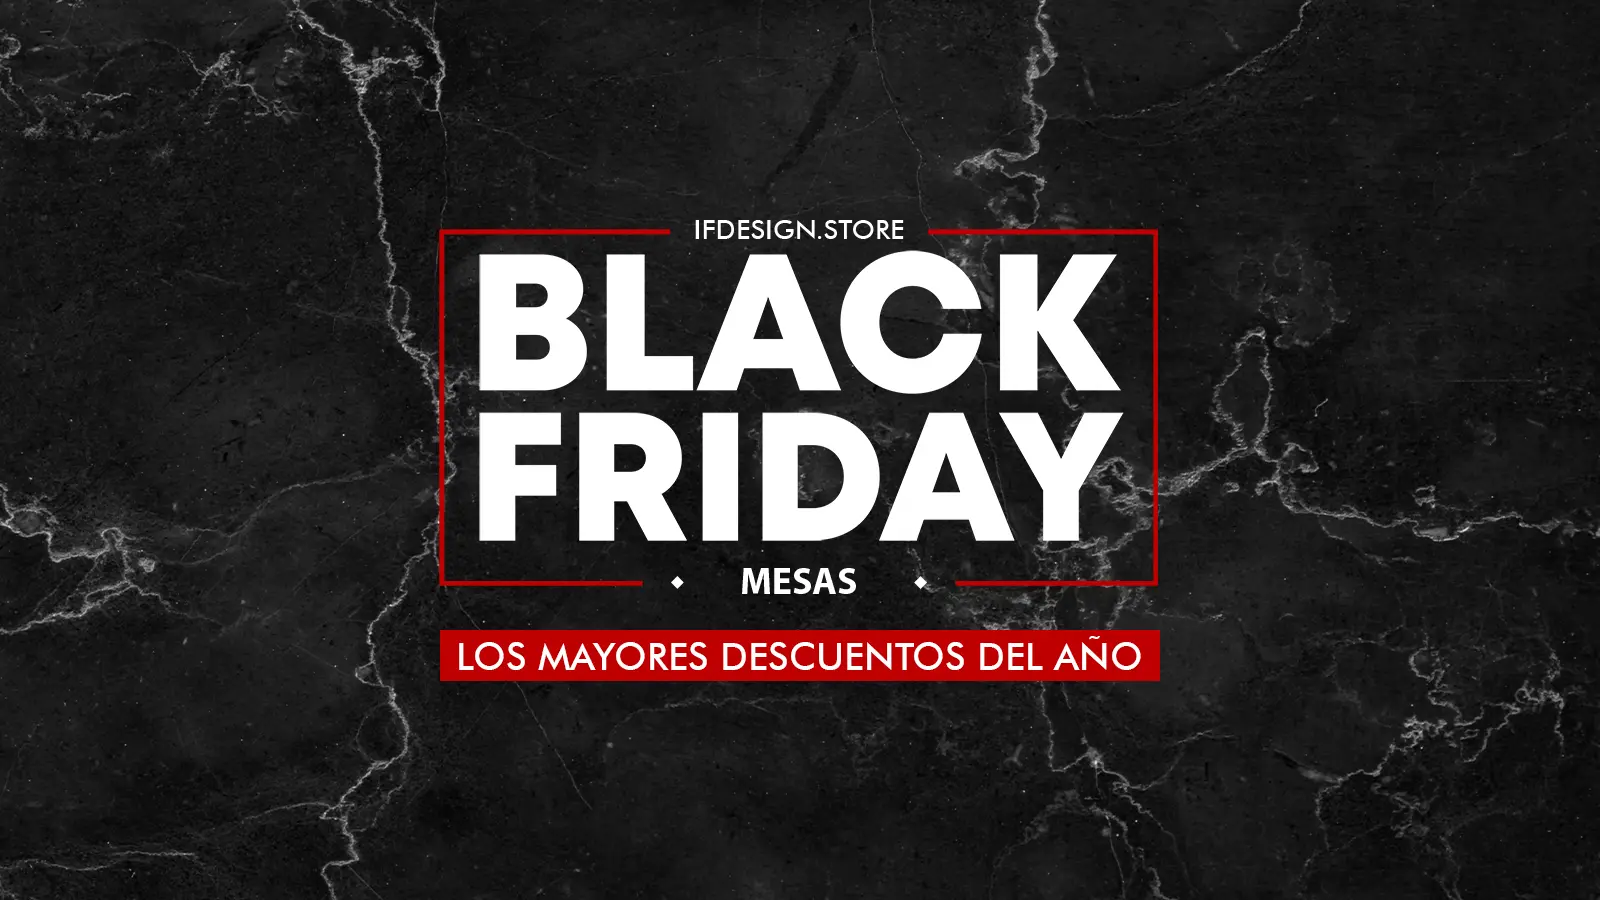 black-friday-mesas-ifdesign-store-002